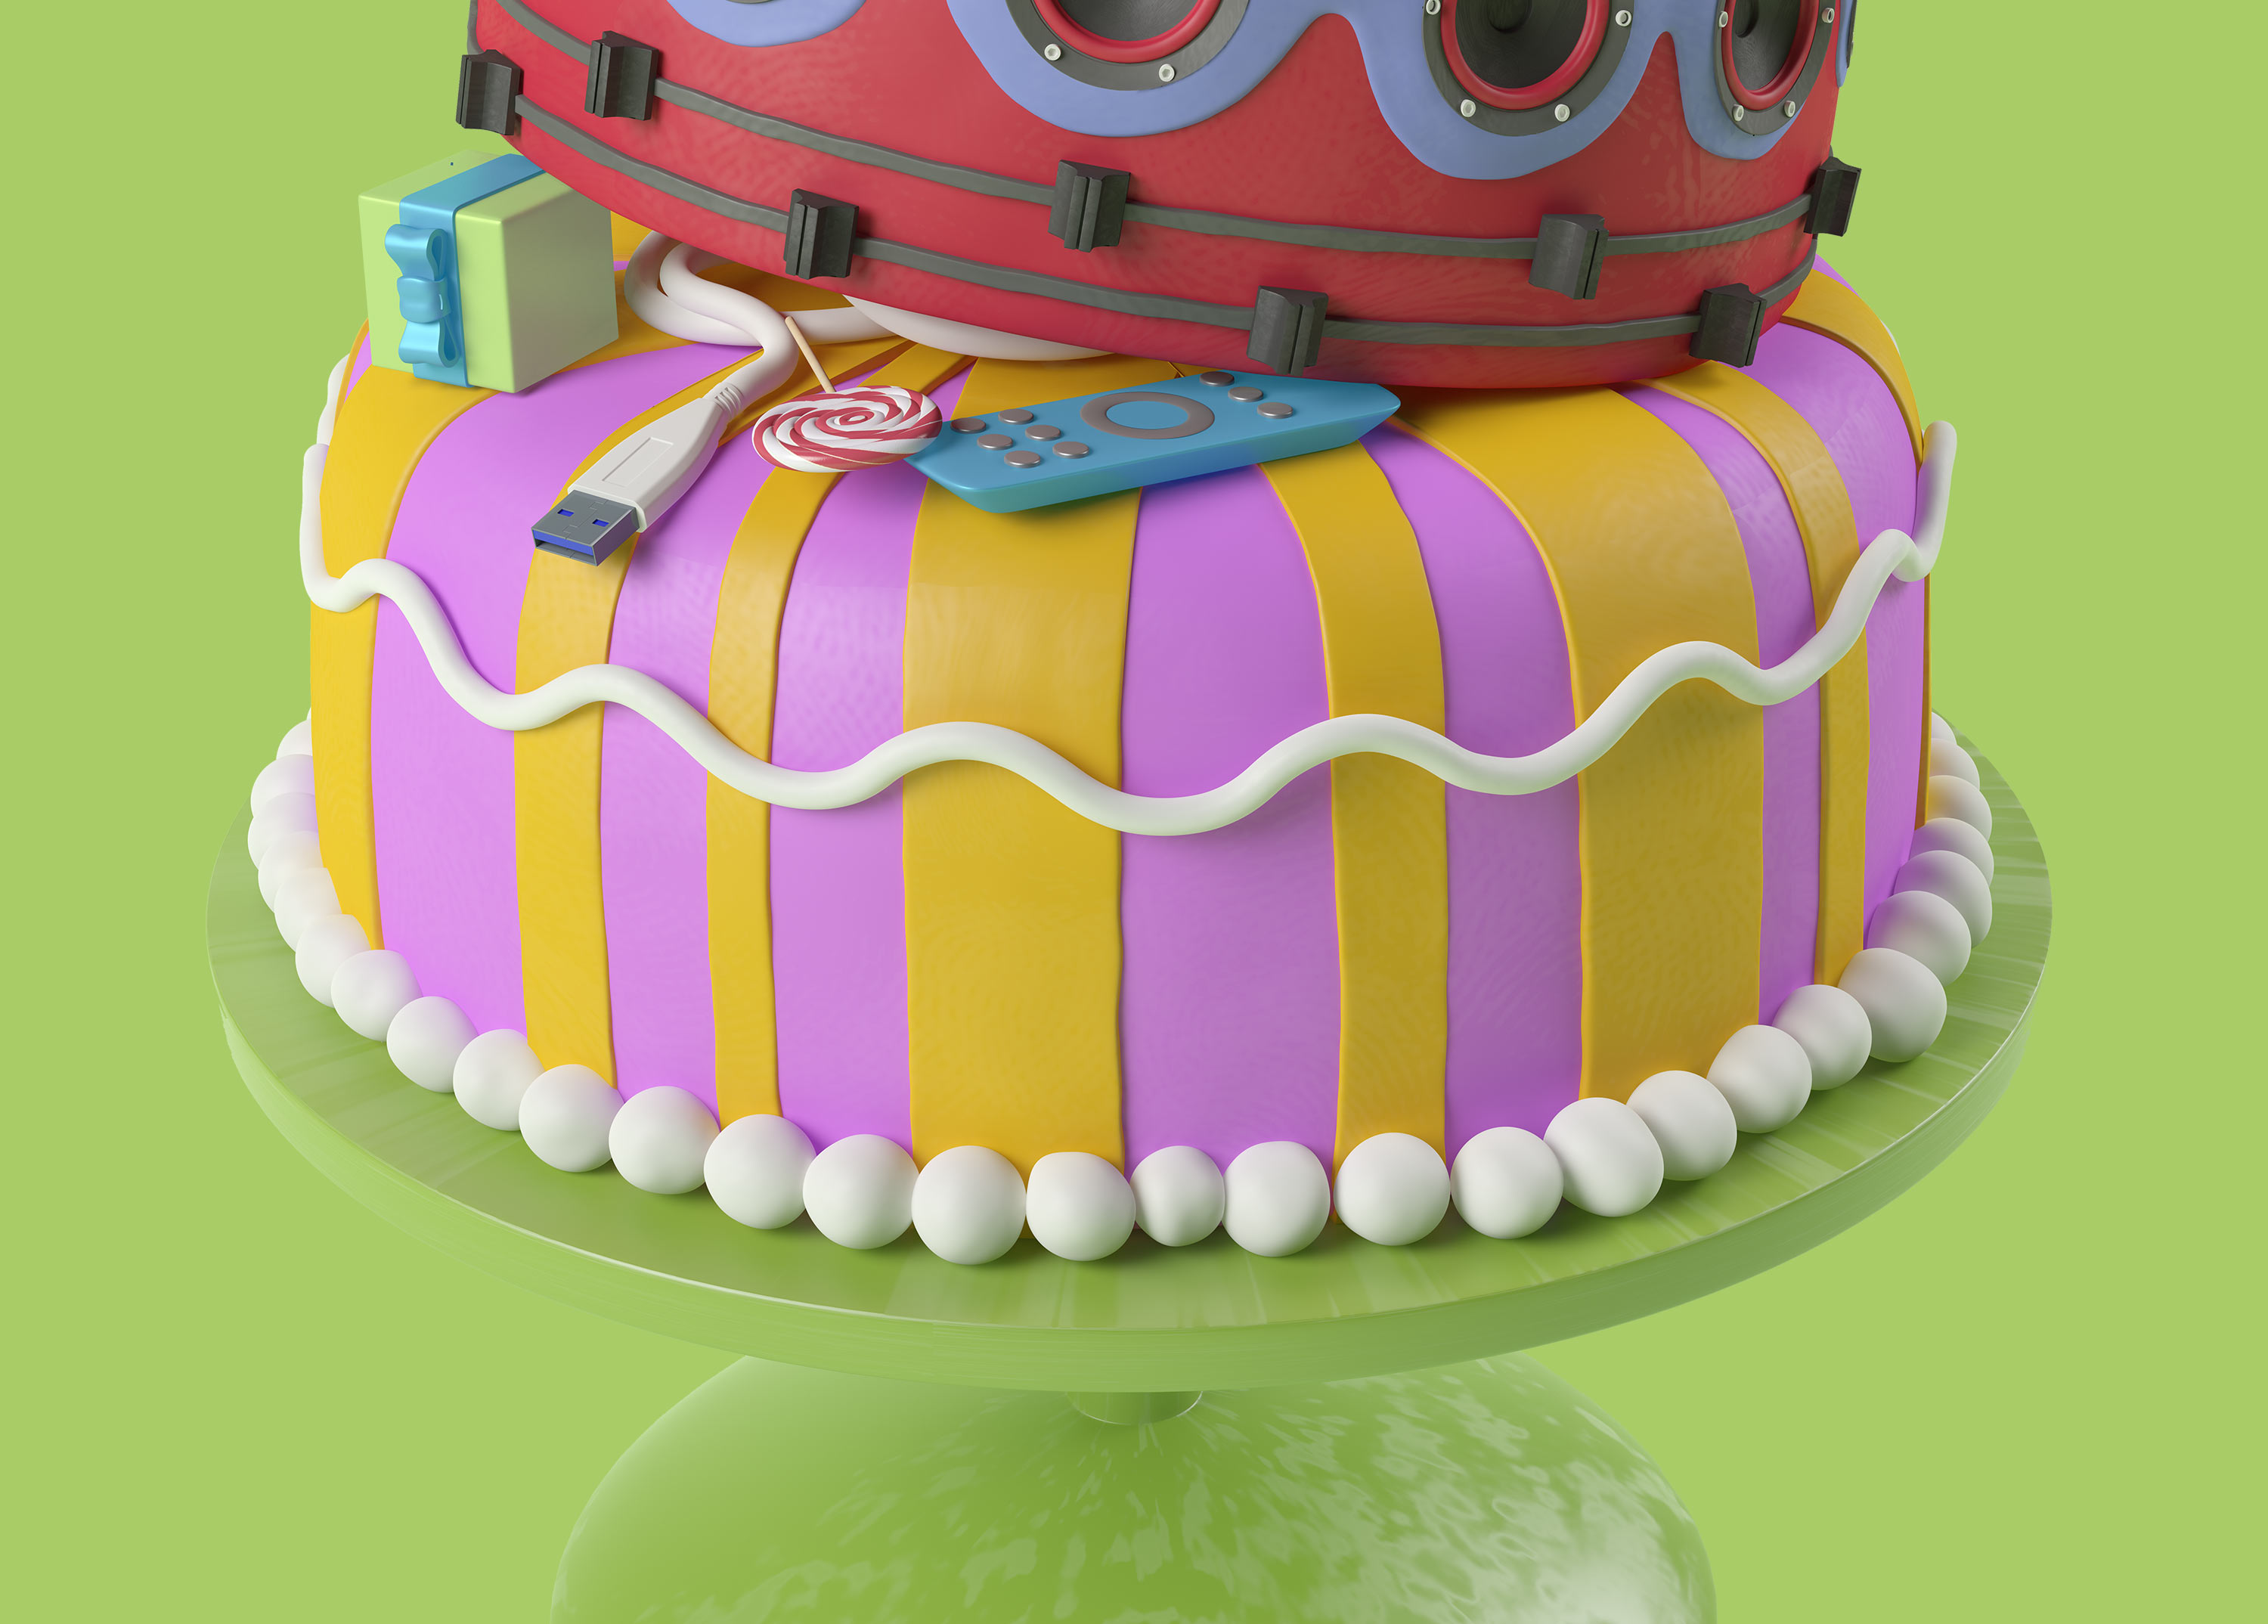 3D ILLUSTRATION CAKE CESS CGI